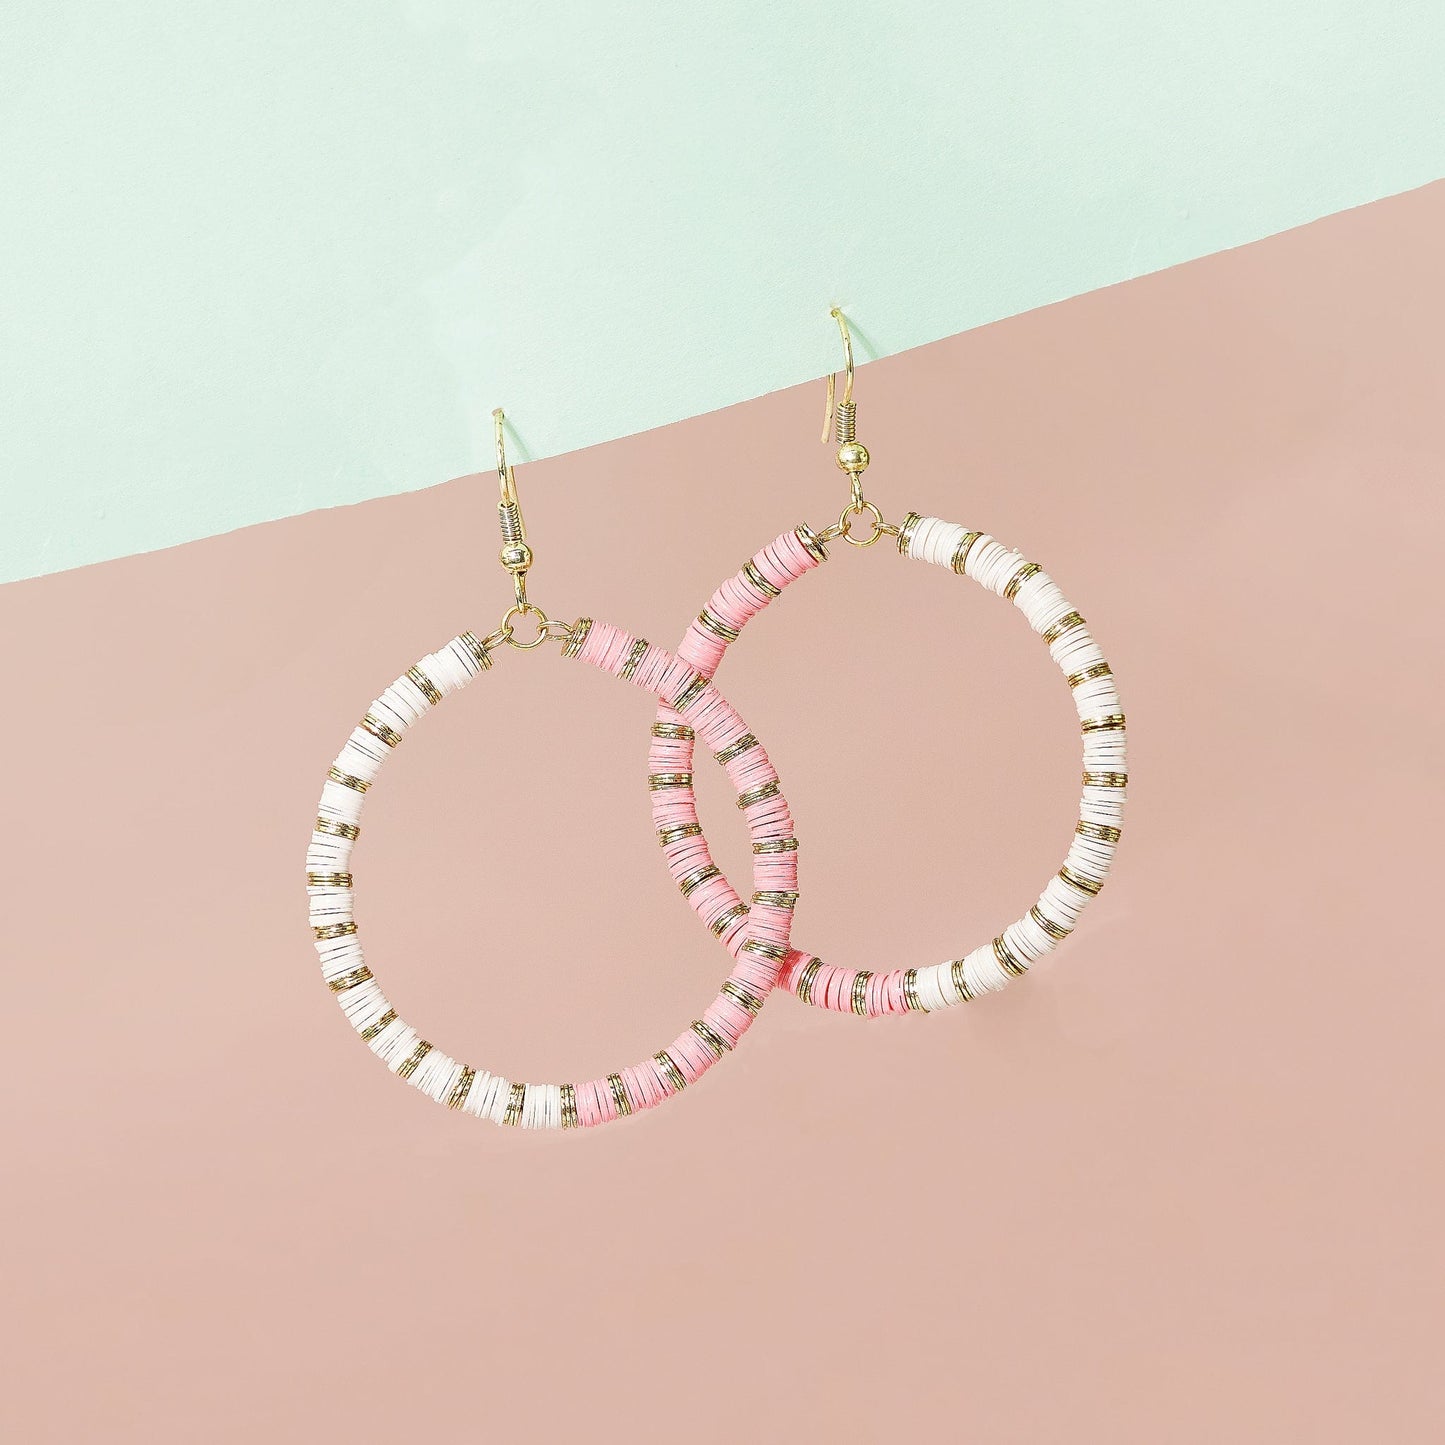 Buy Pink Rhinestone Earrings, Pink Dangle Earrings. Light Pink Earrings  Online in India - Etsy